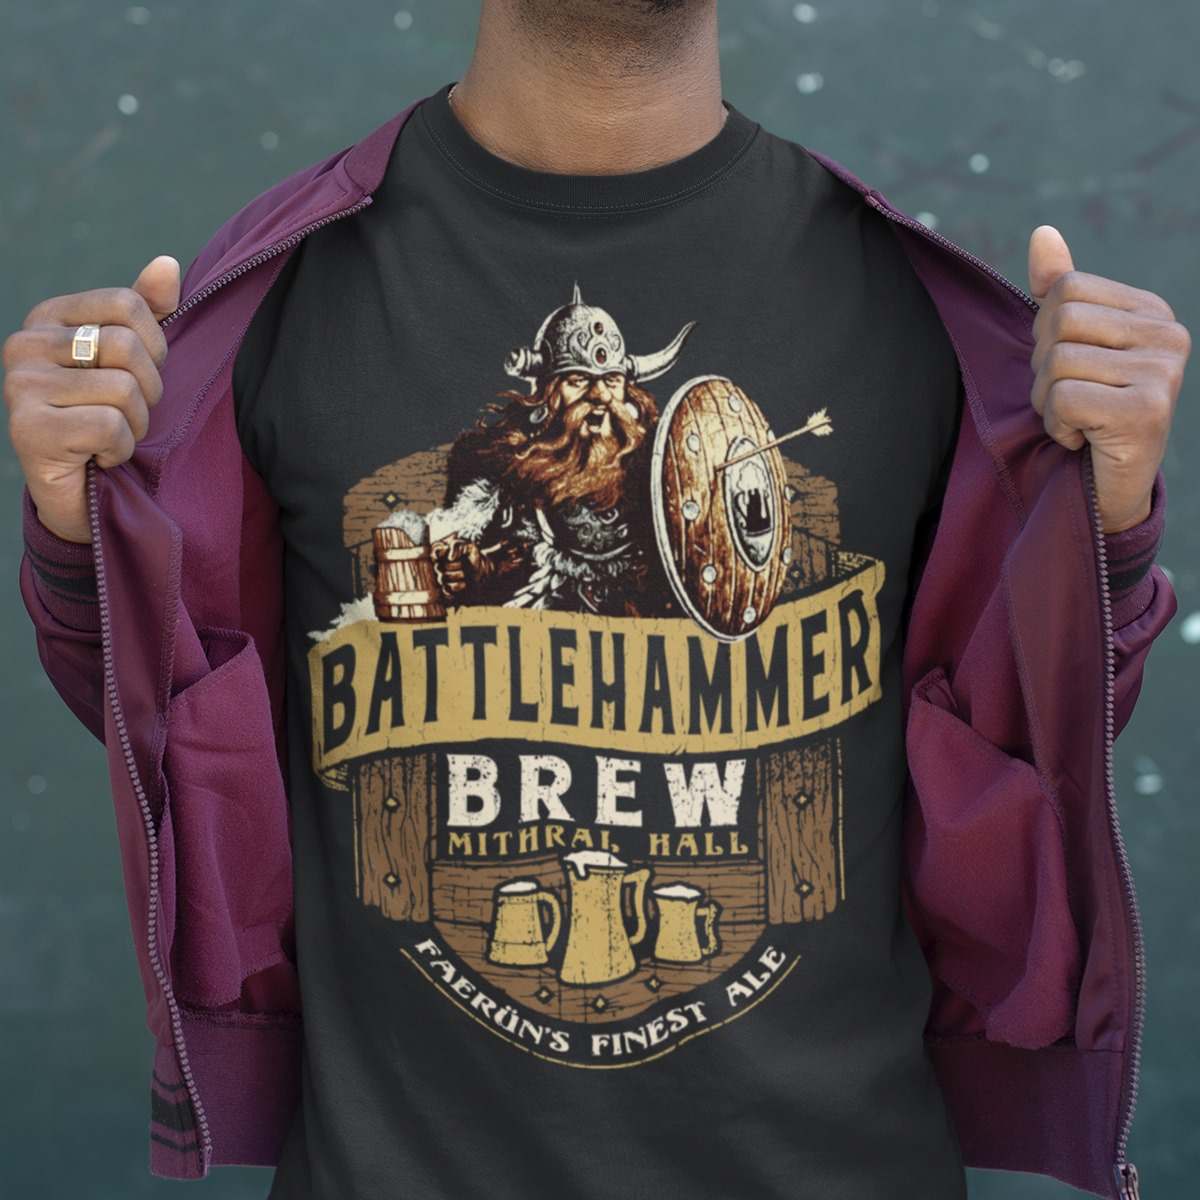 Battlehammer brew - Viking guy, beer lover